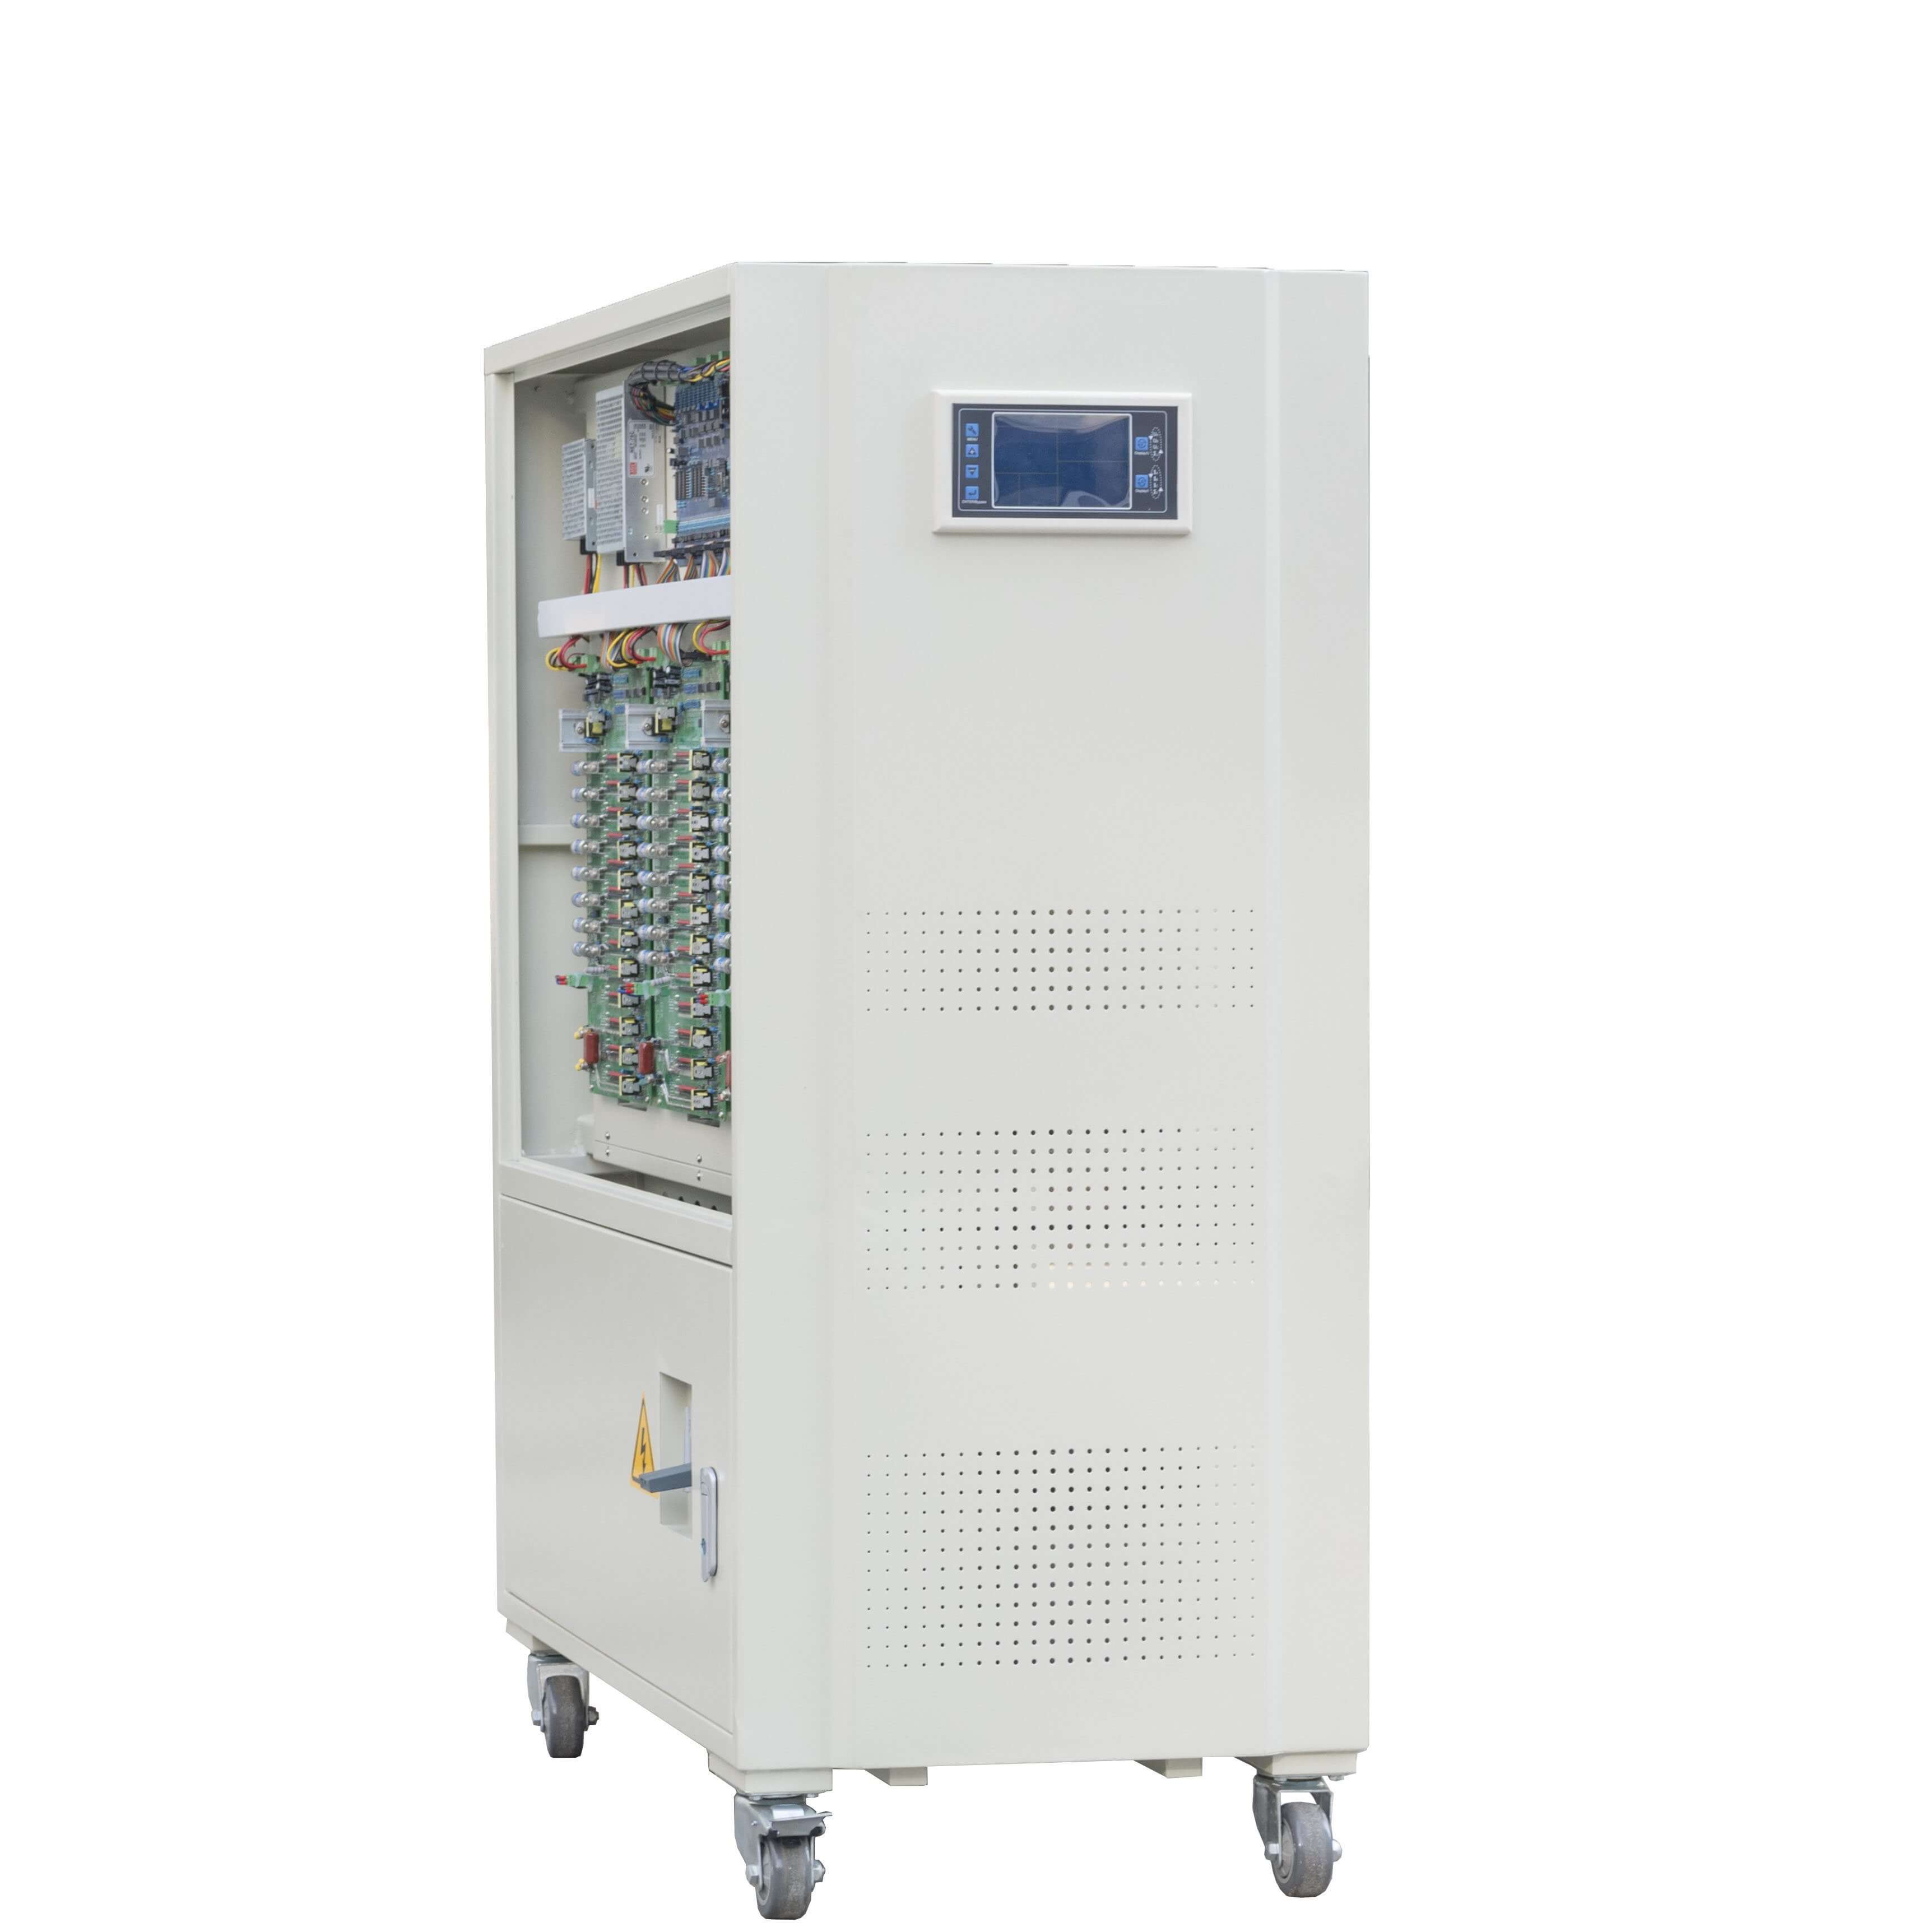 500 kVA 3 Phase Static Voltage Stabilizer